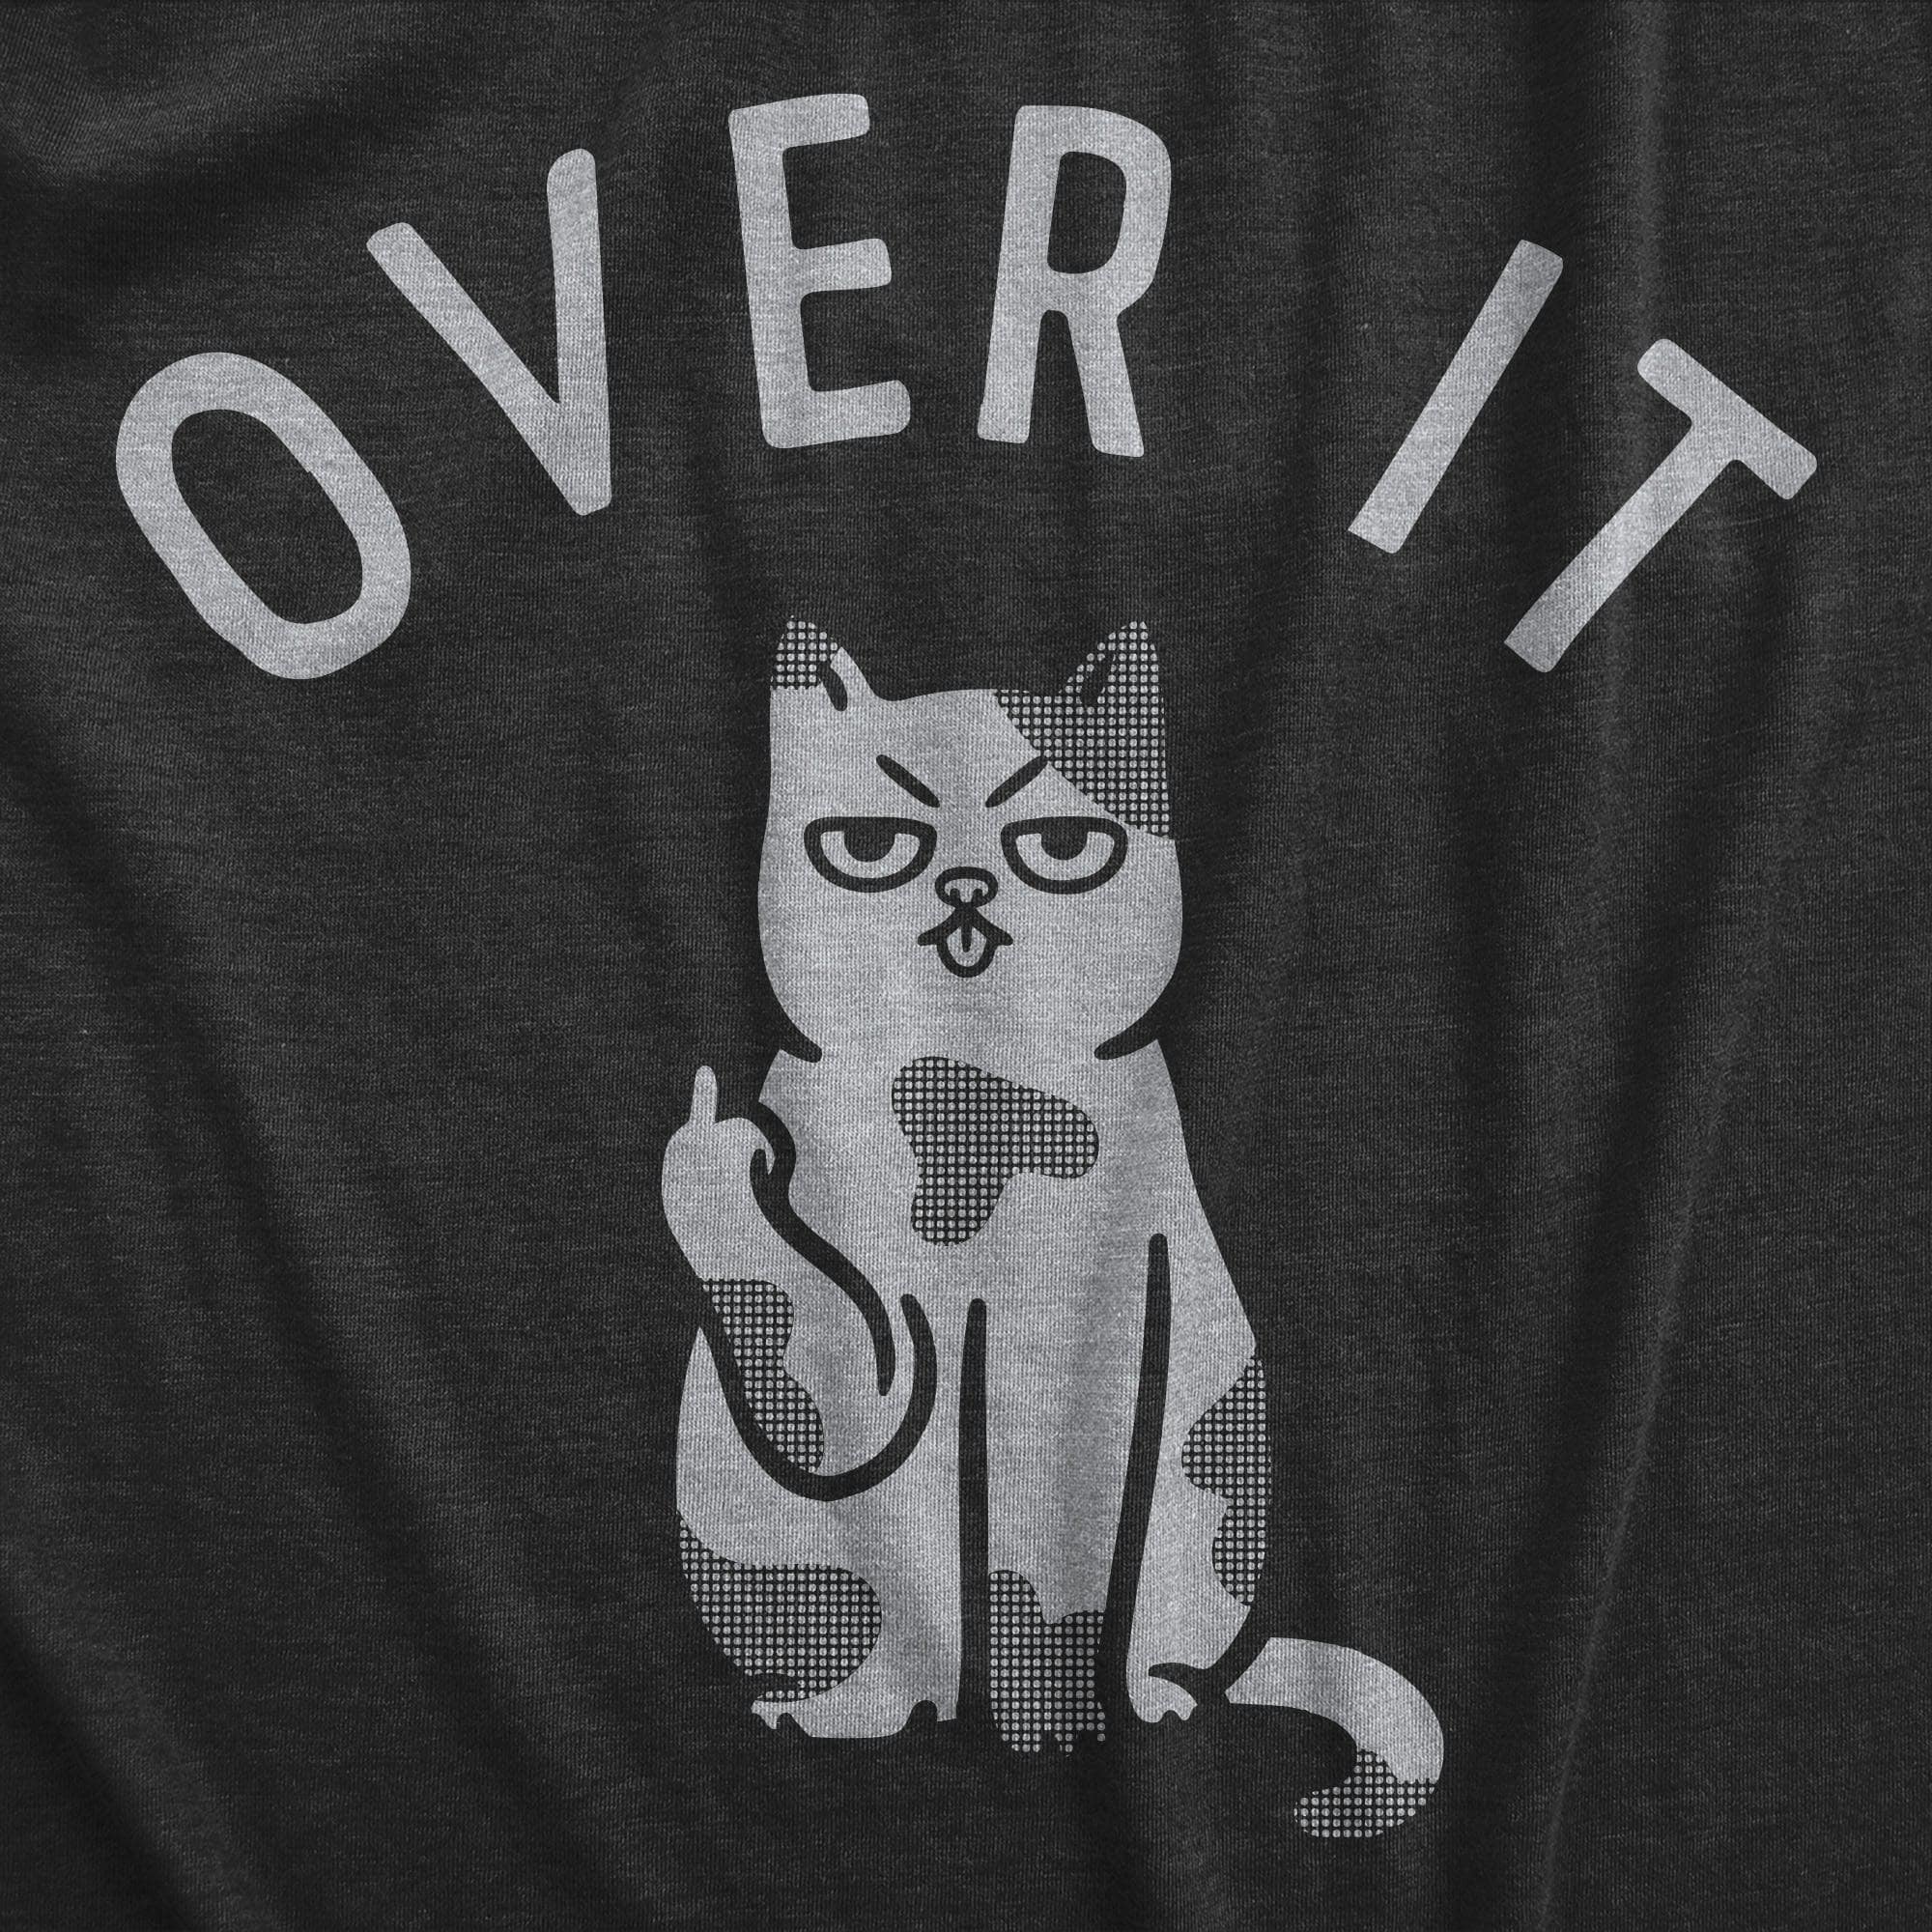 Over It Cat Women's Tshirt  -  Crazy Dog T-Shirts